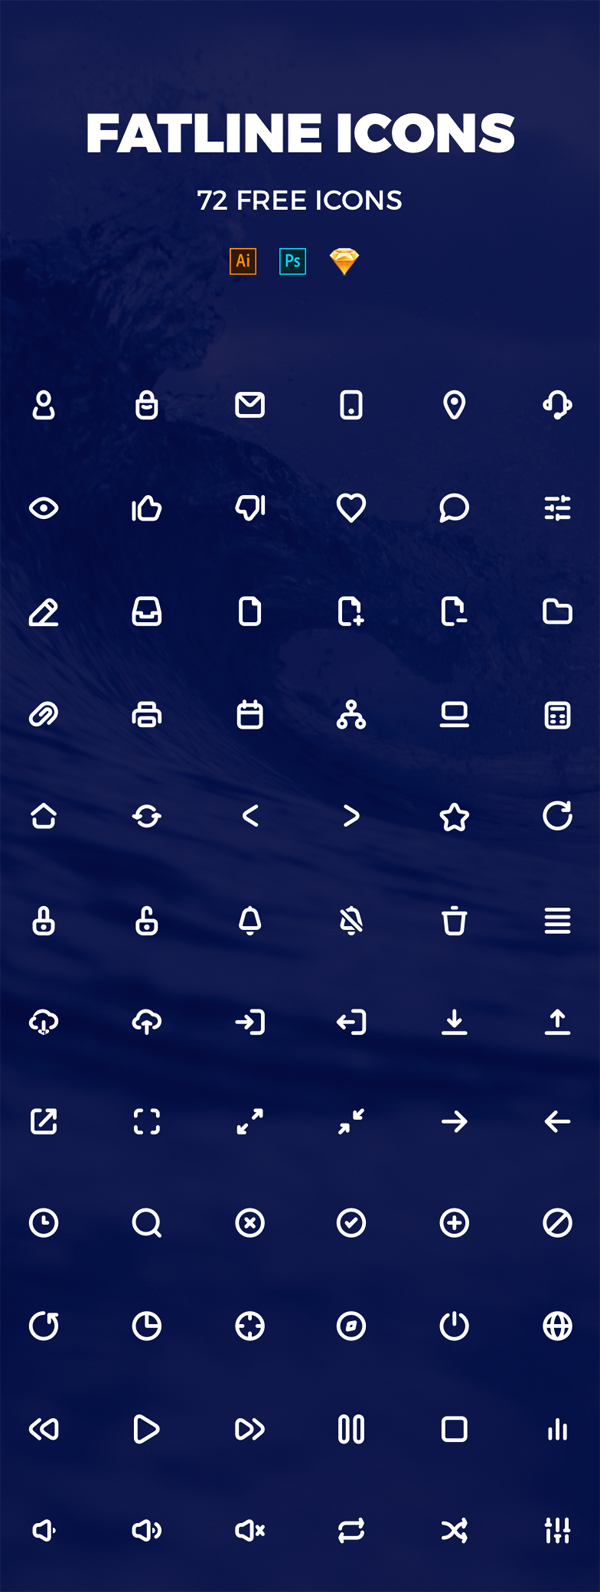 Pixel Perfect Fatline Free Icons (72 Icons)